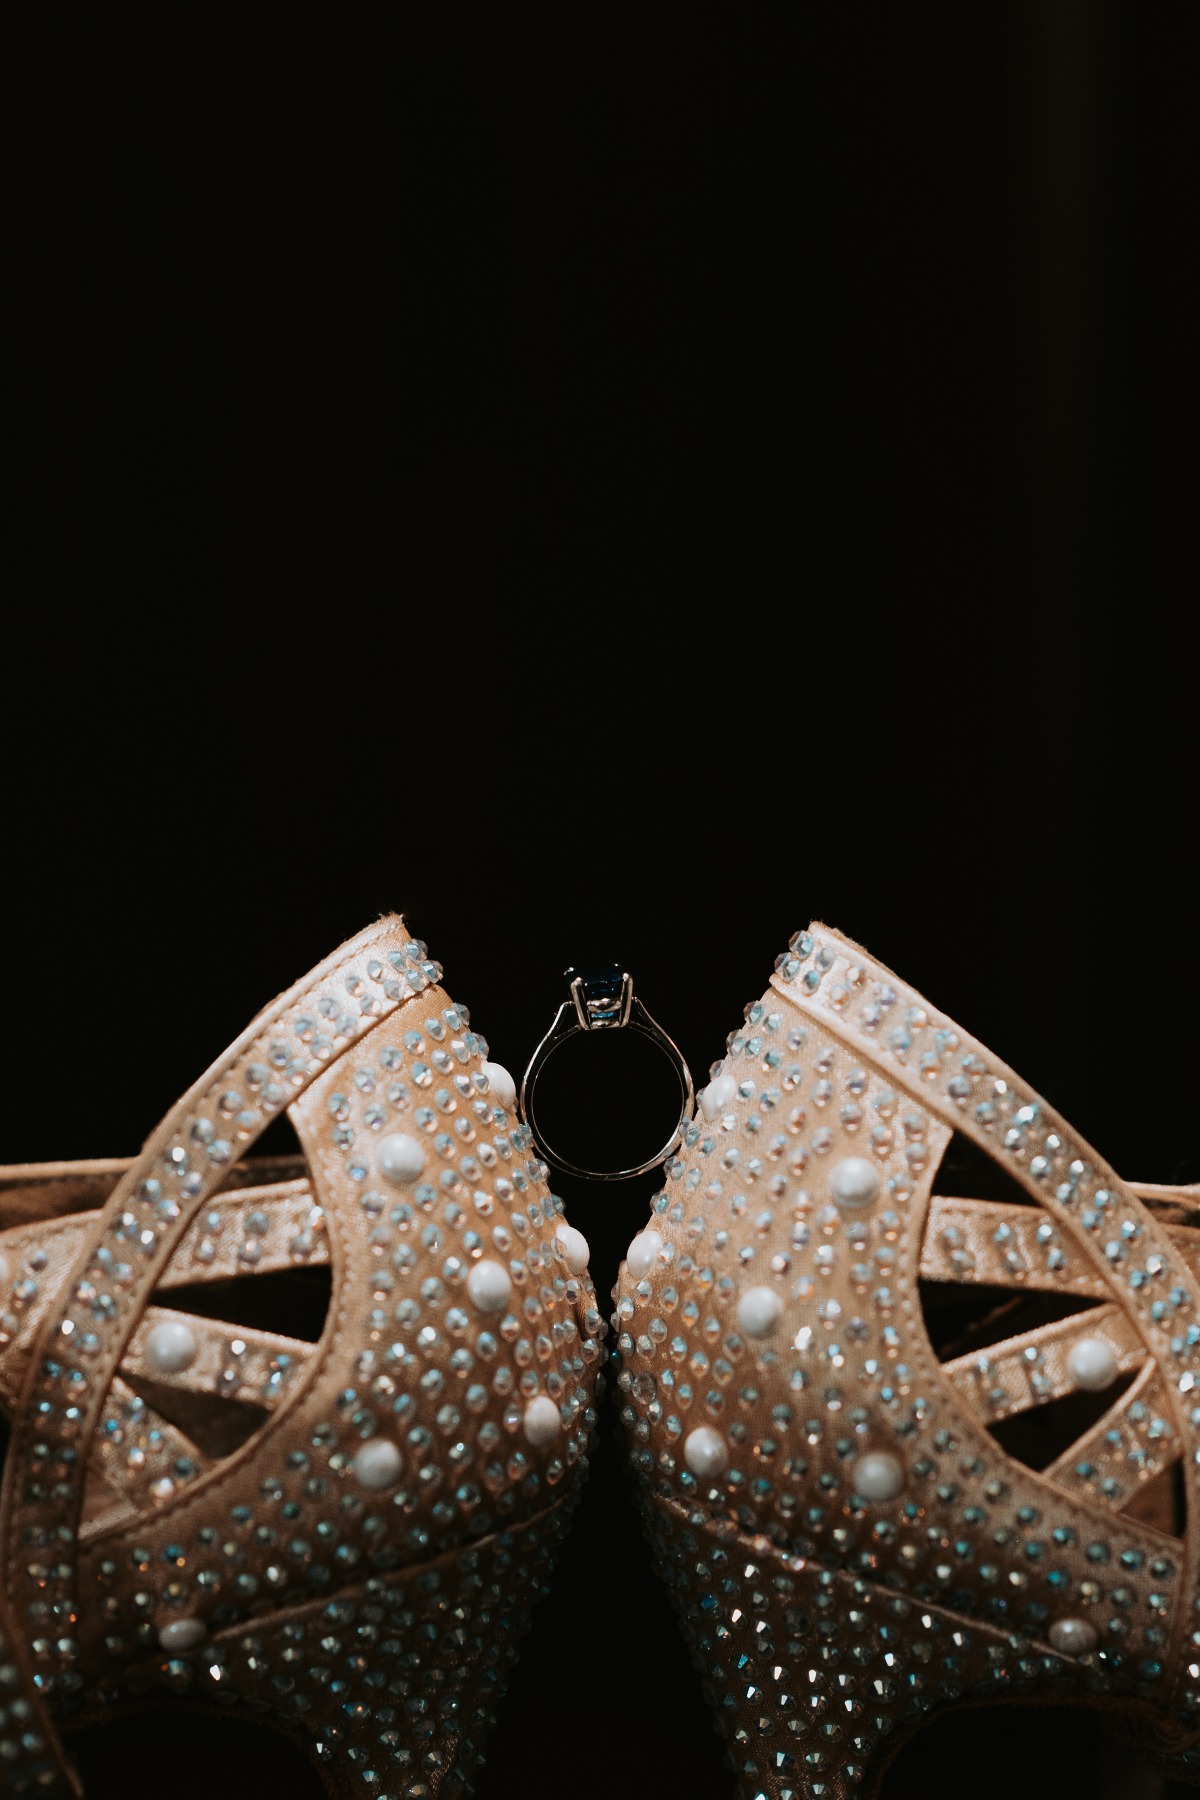 swarvski crystal encrusted nude wedding shoes